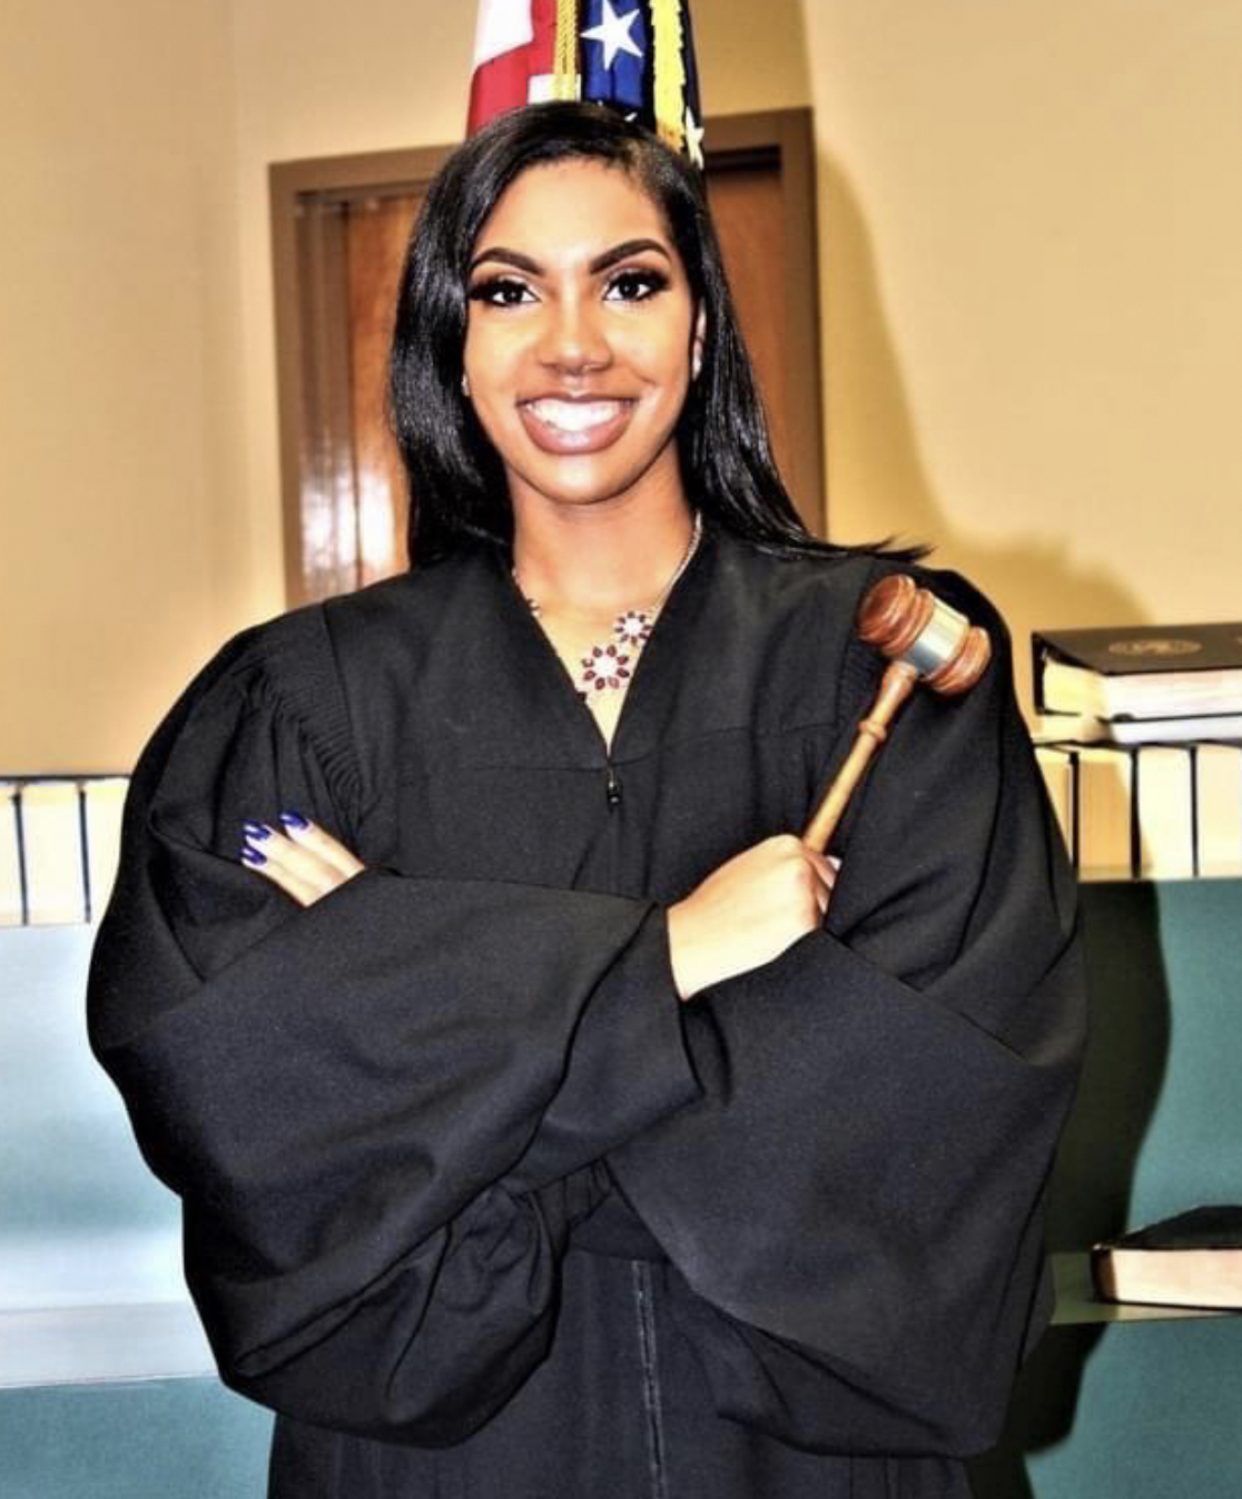 Meet 28-Year Old Shequeena McKenzie, the First Ever Black Female Judge in Her City